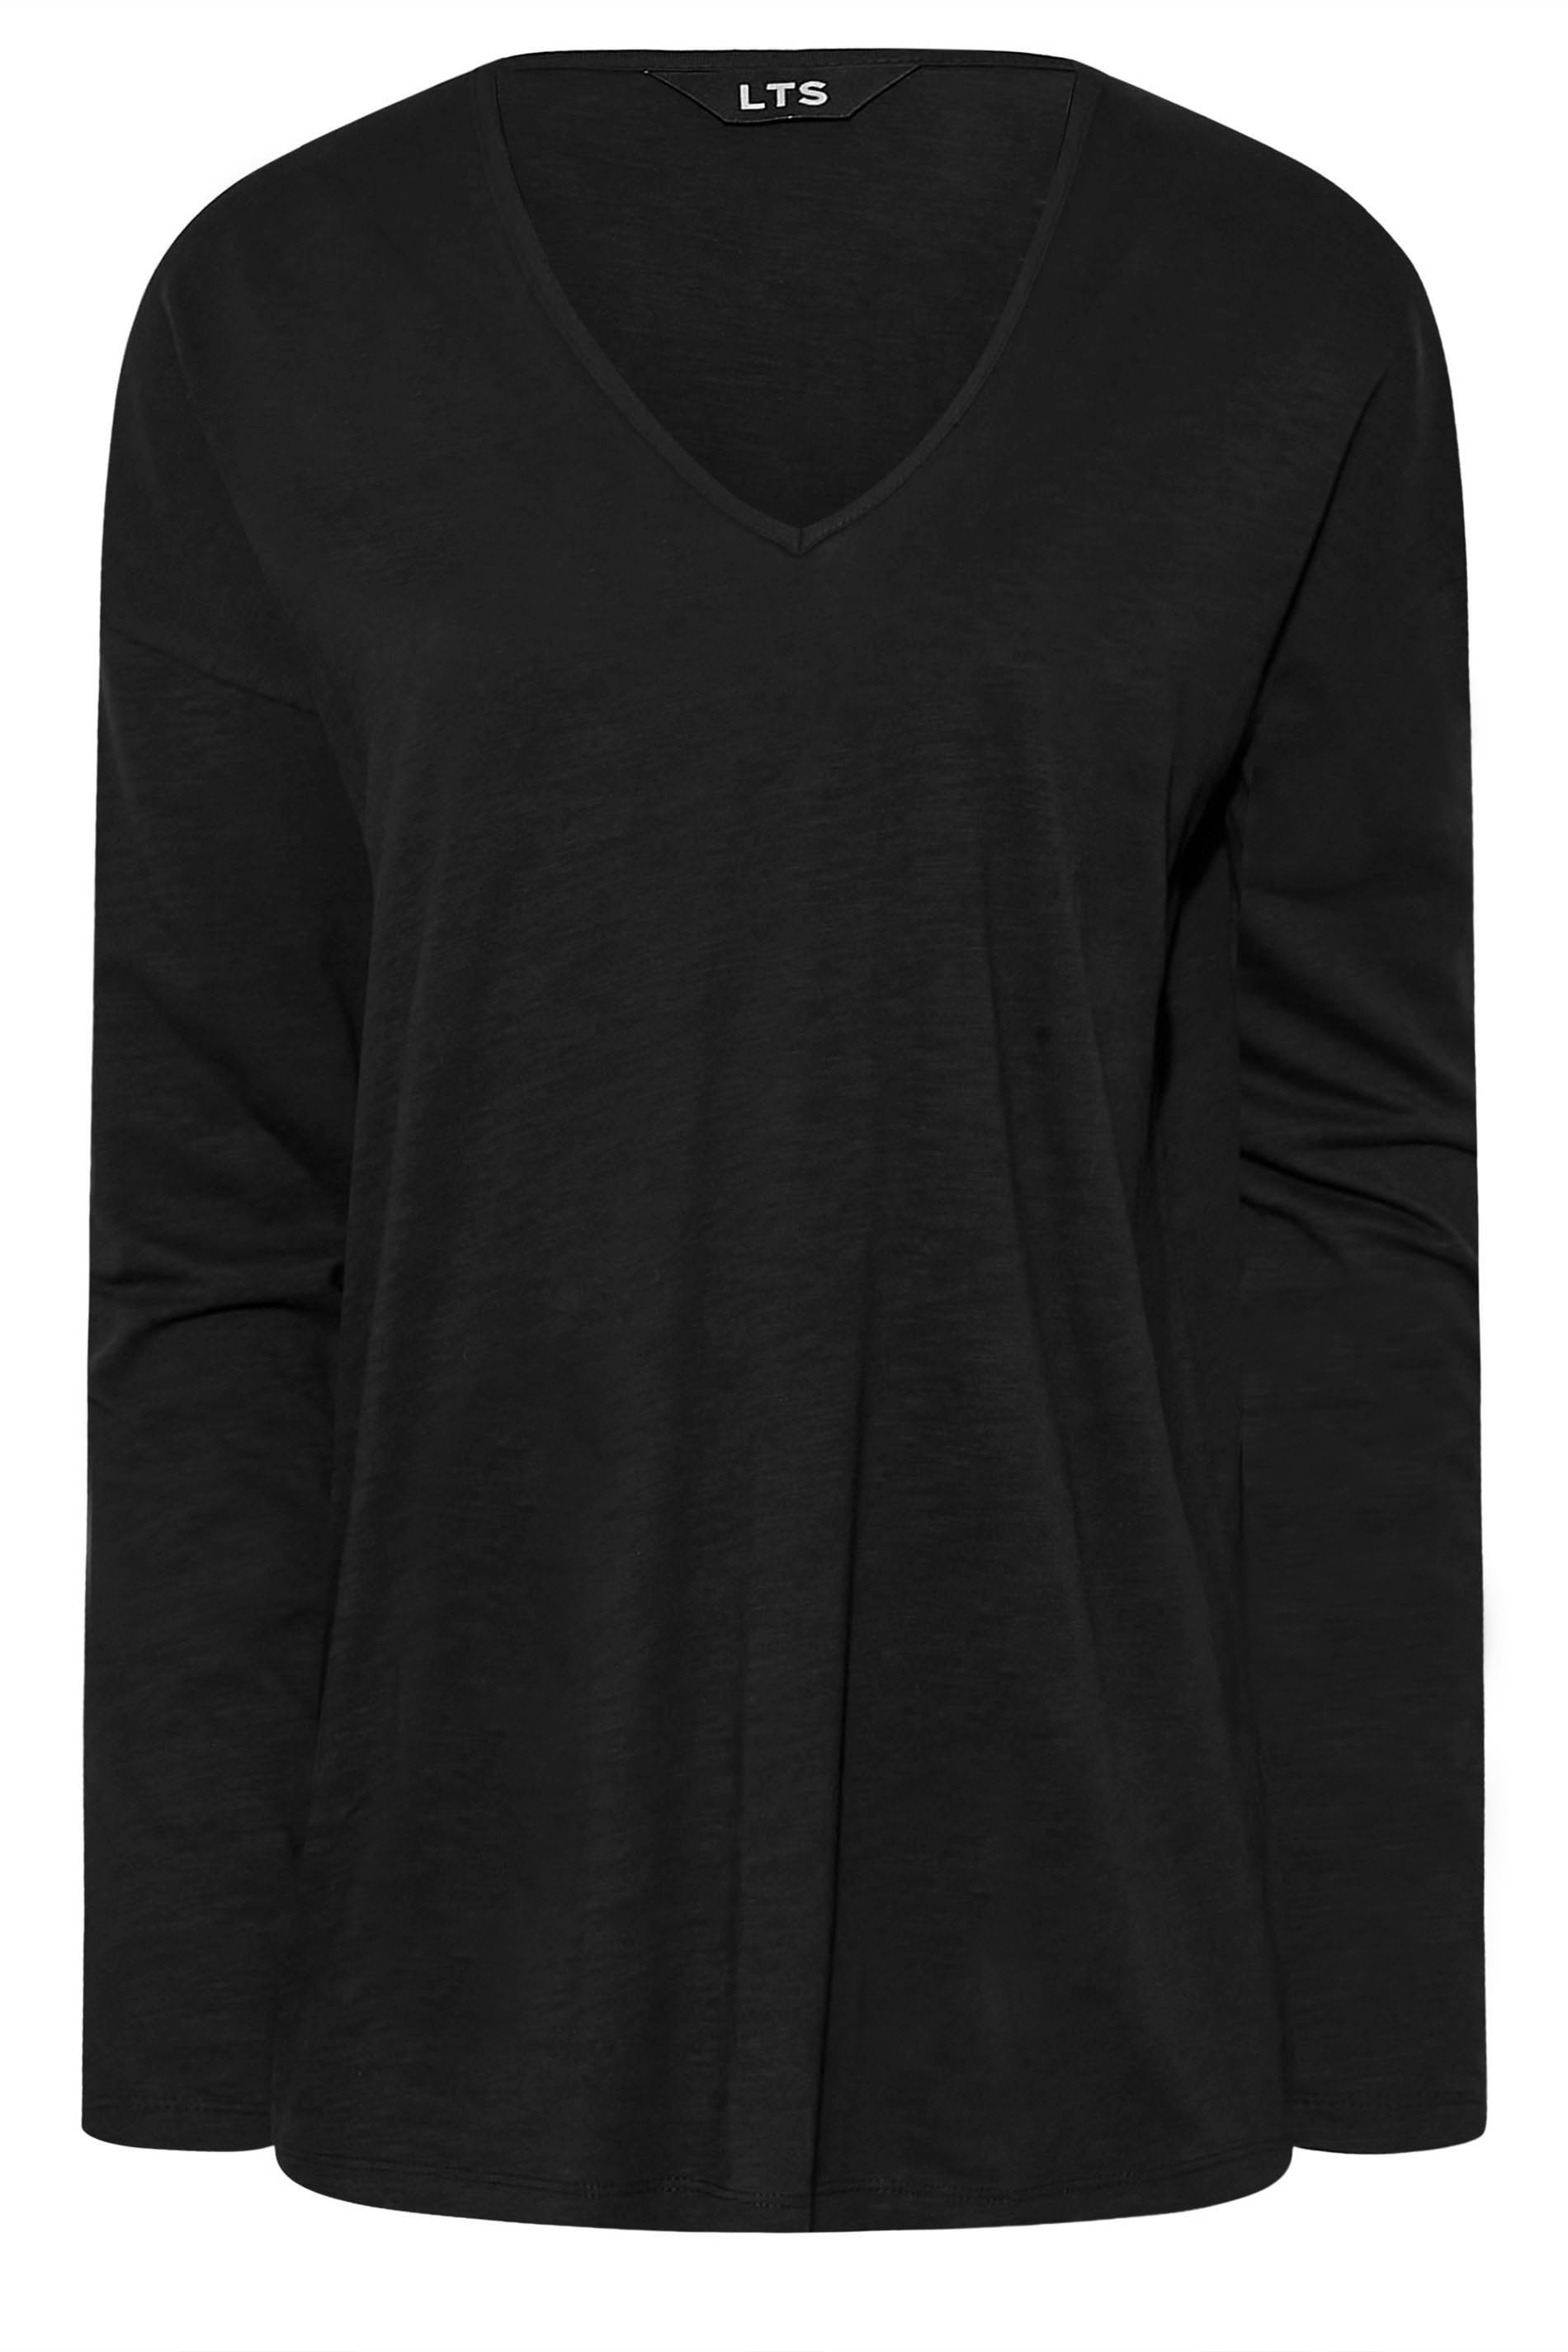 LTS Tall Women's Black V-Neck Long Sleeve Cotton T-Shirt | Long Tall Sally 2